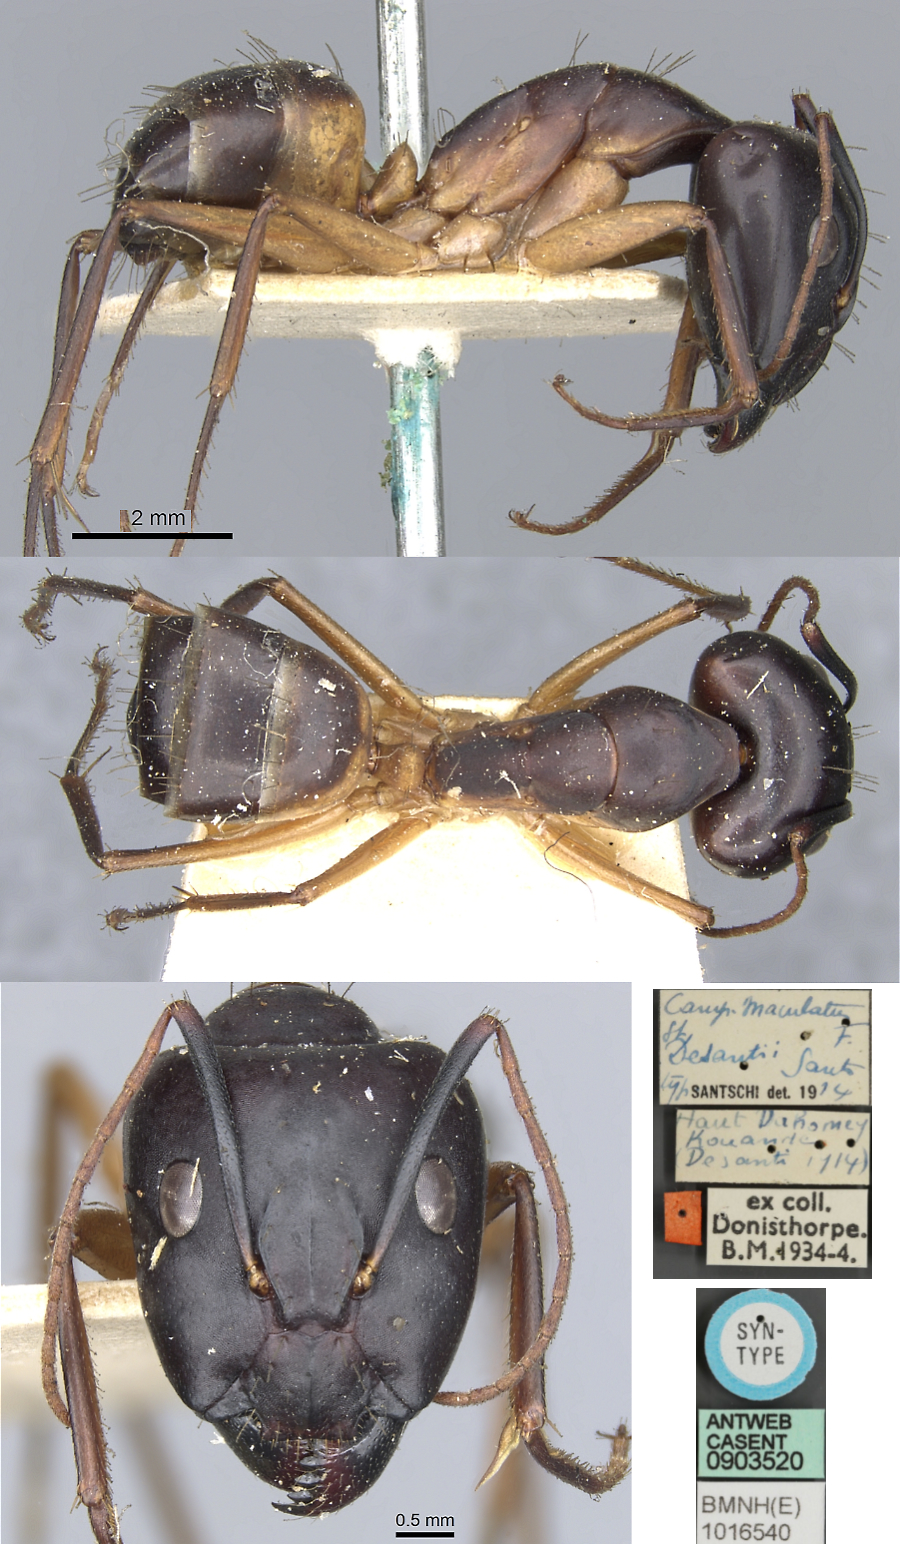 Camponotus desantii major